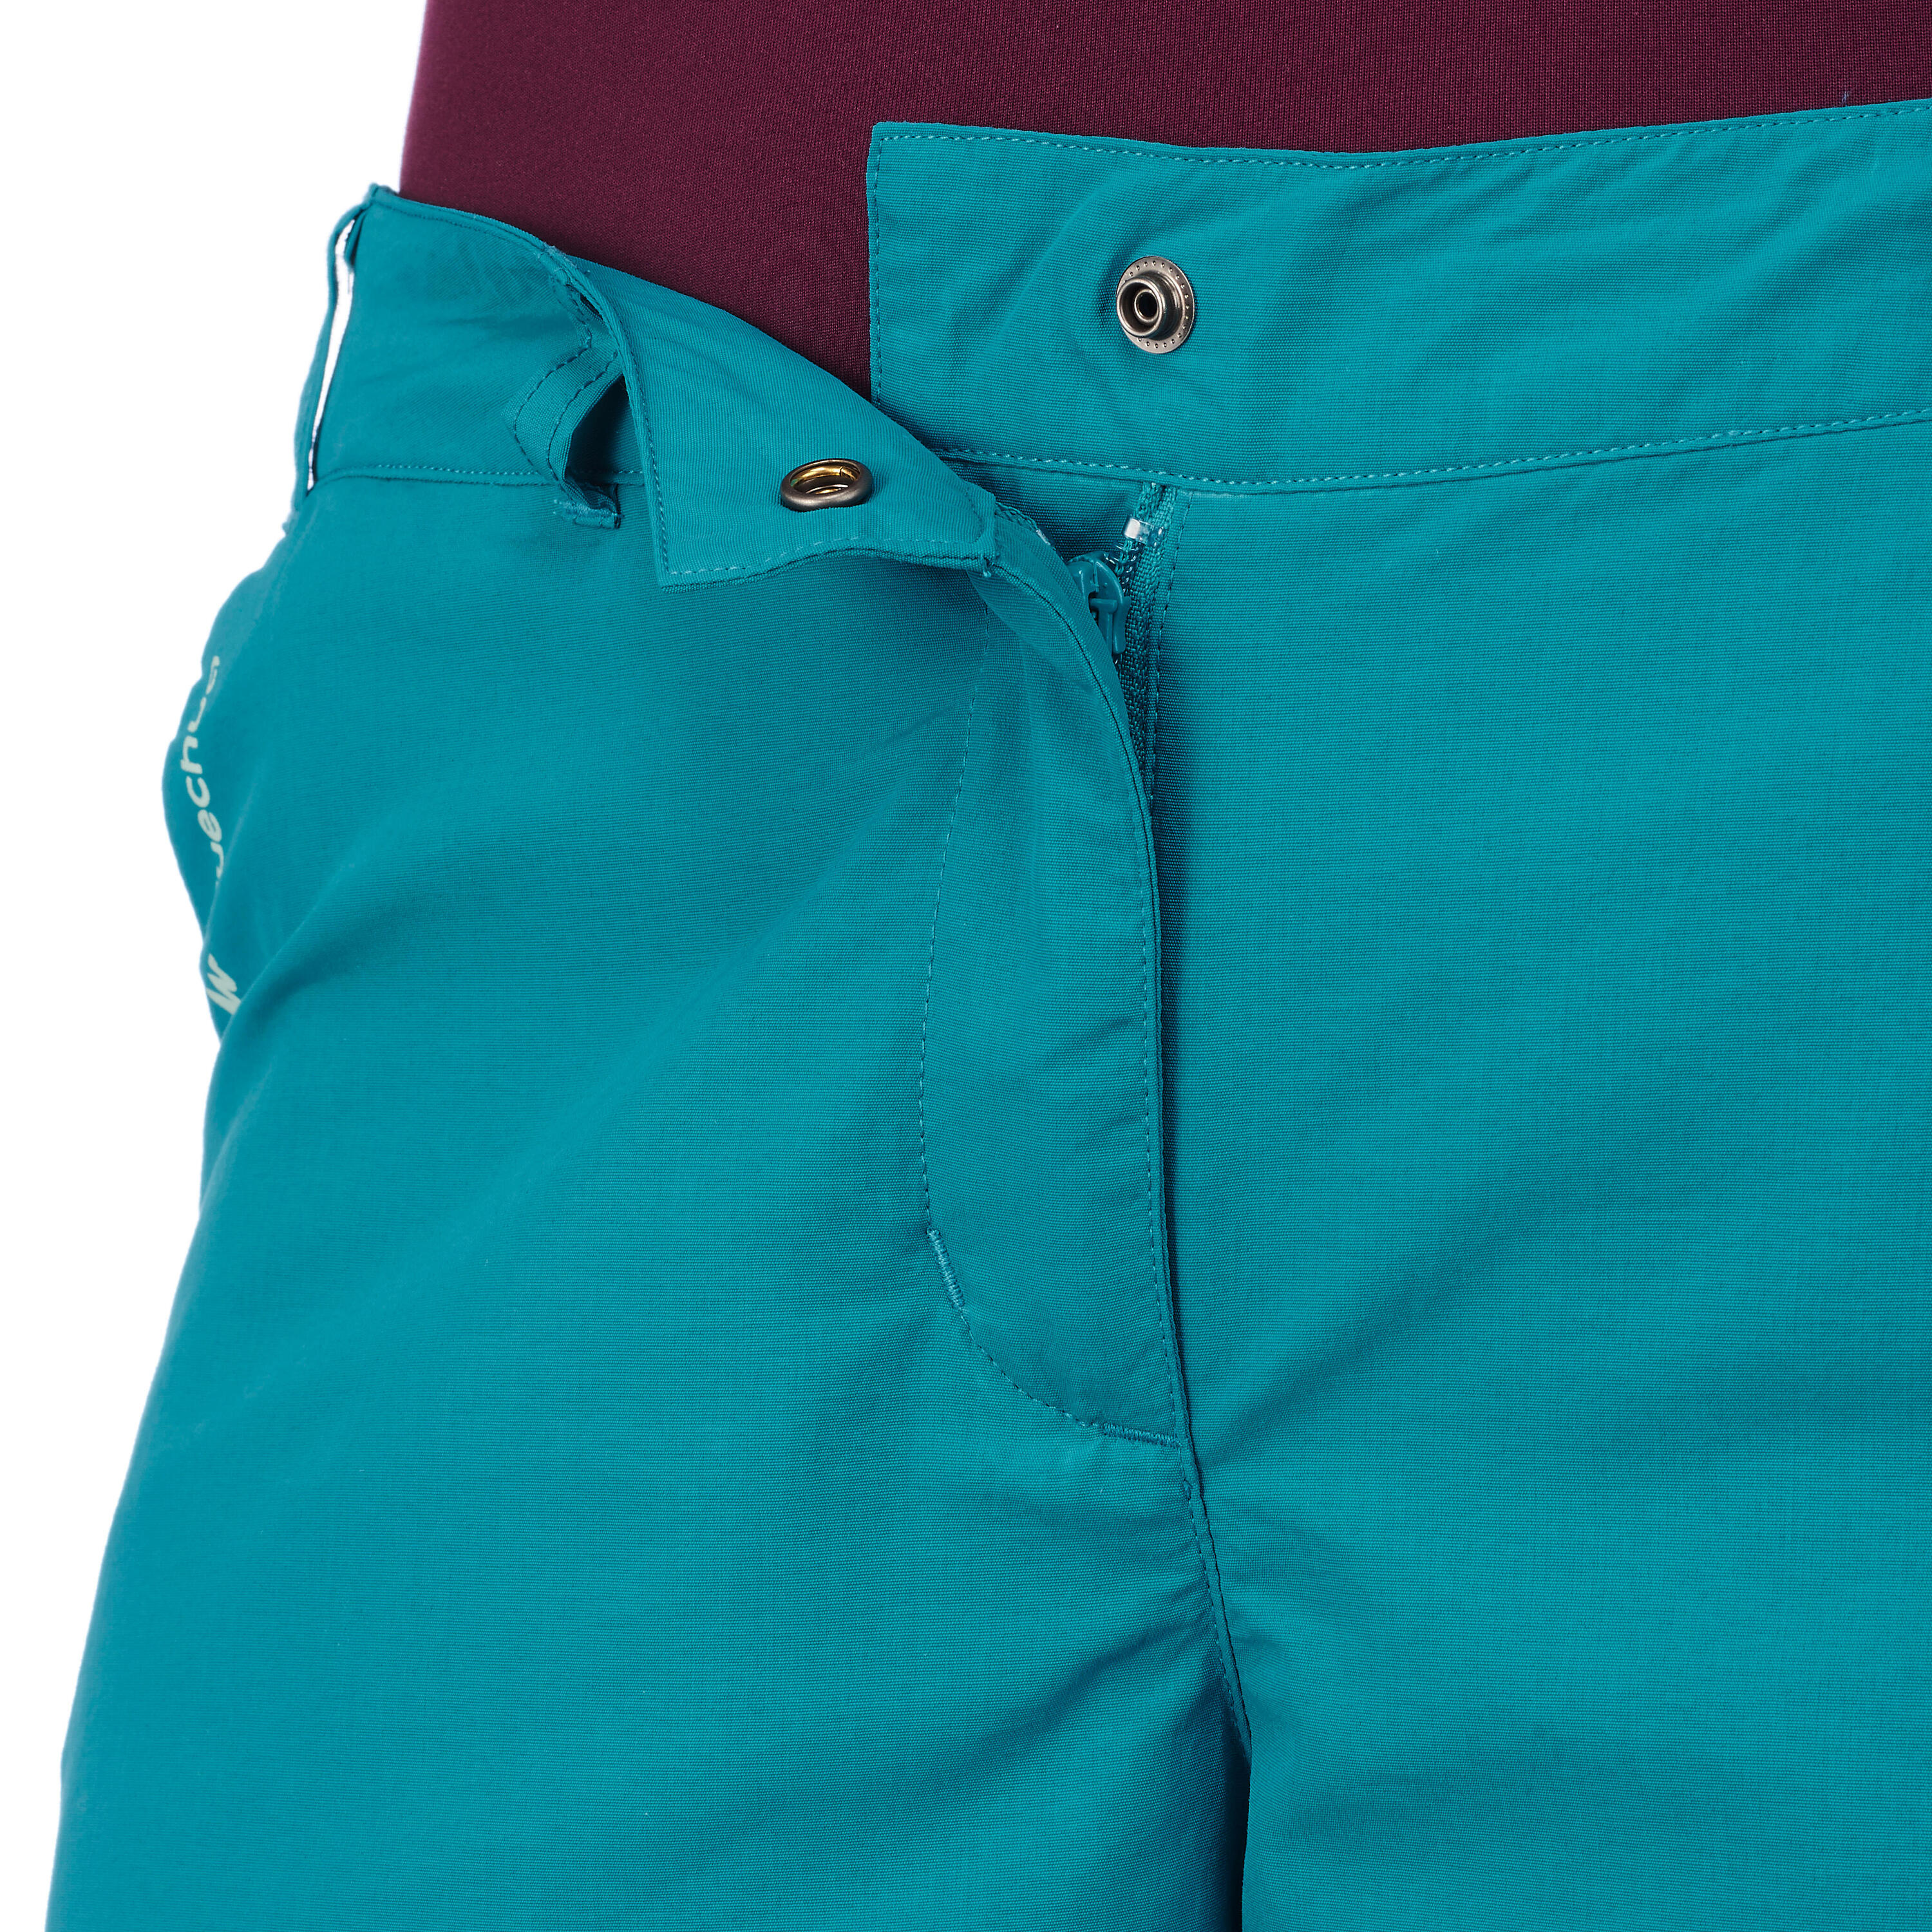 MH100 Women's Mountain Hiking Shorts - Turquoise Blue 5/7